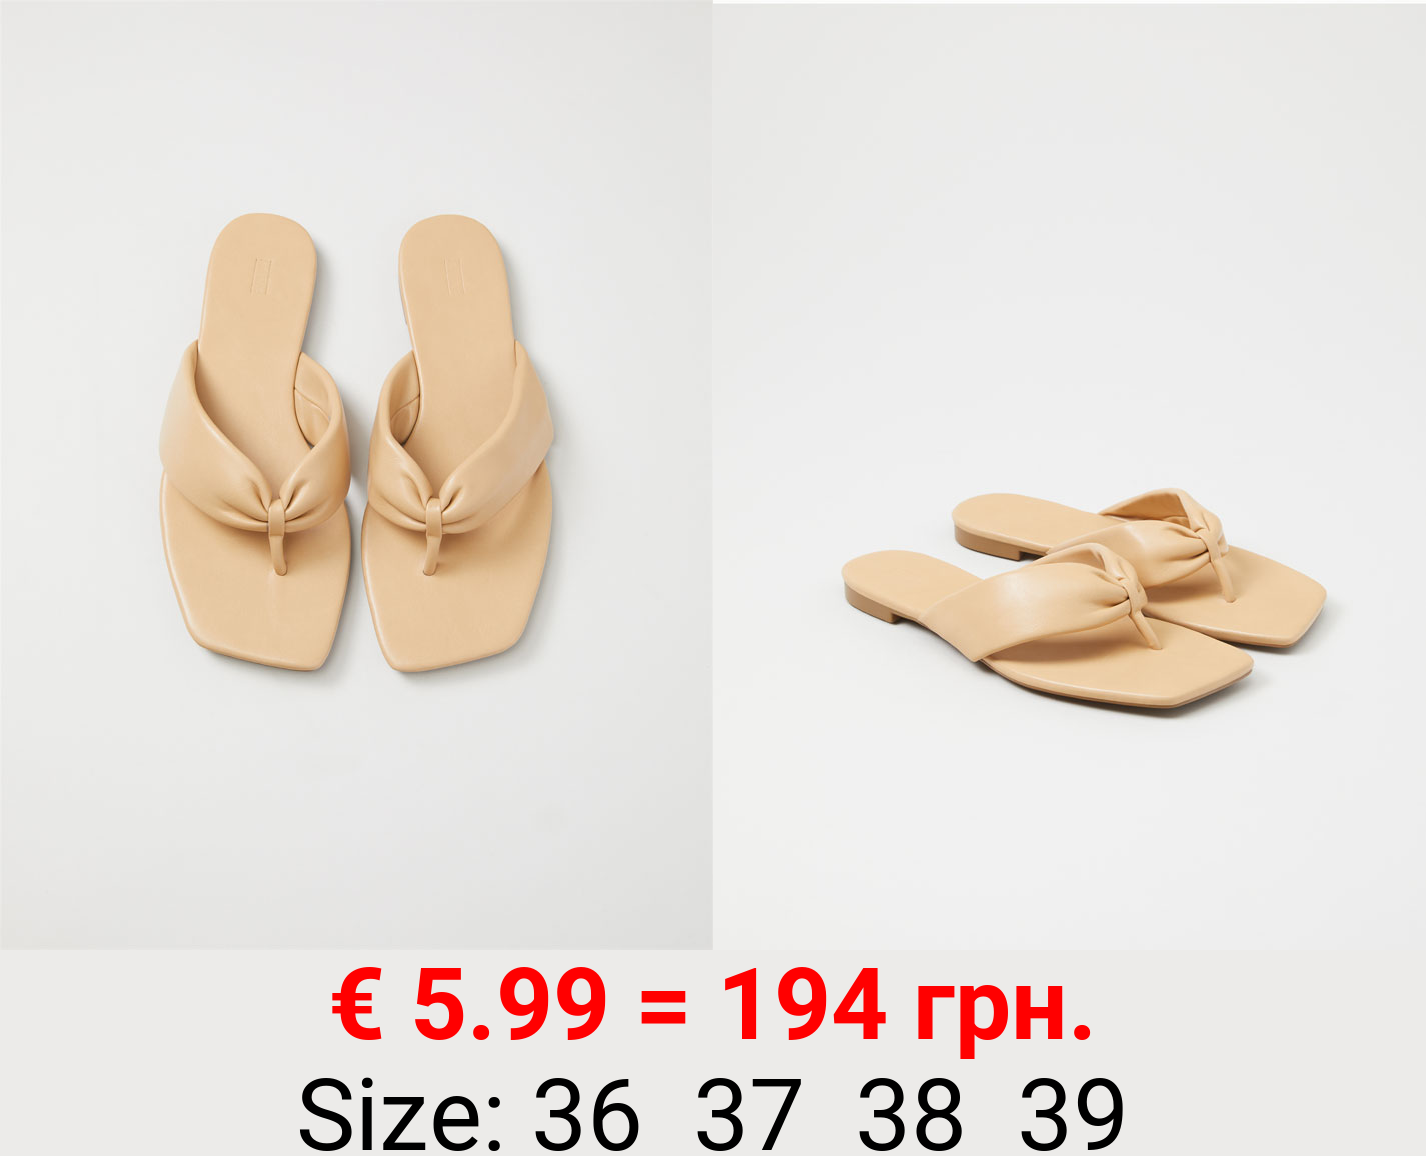 Minimalist quilted sandals